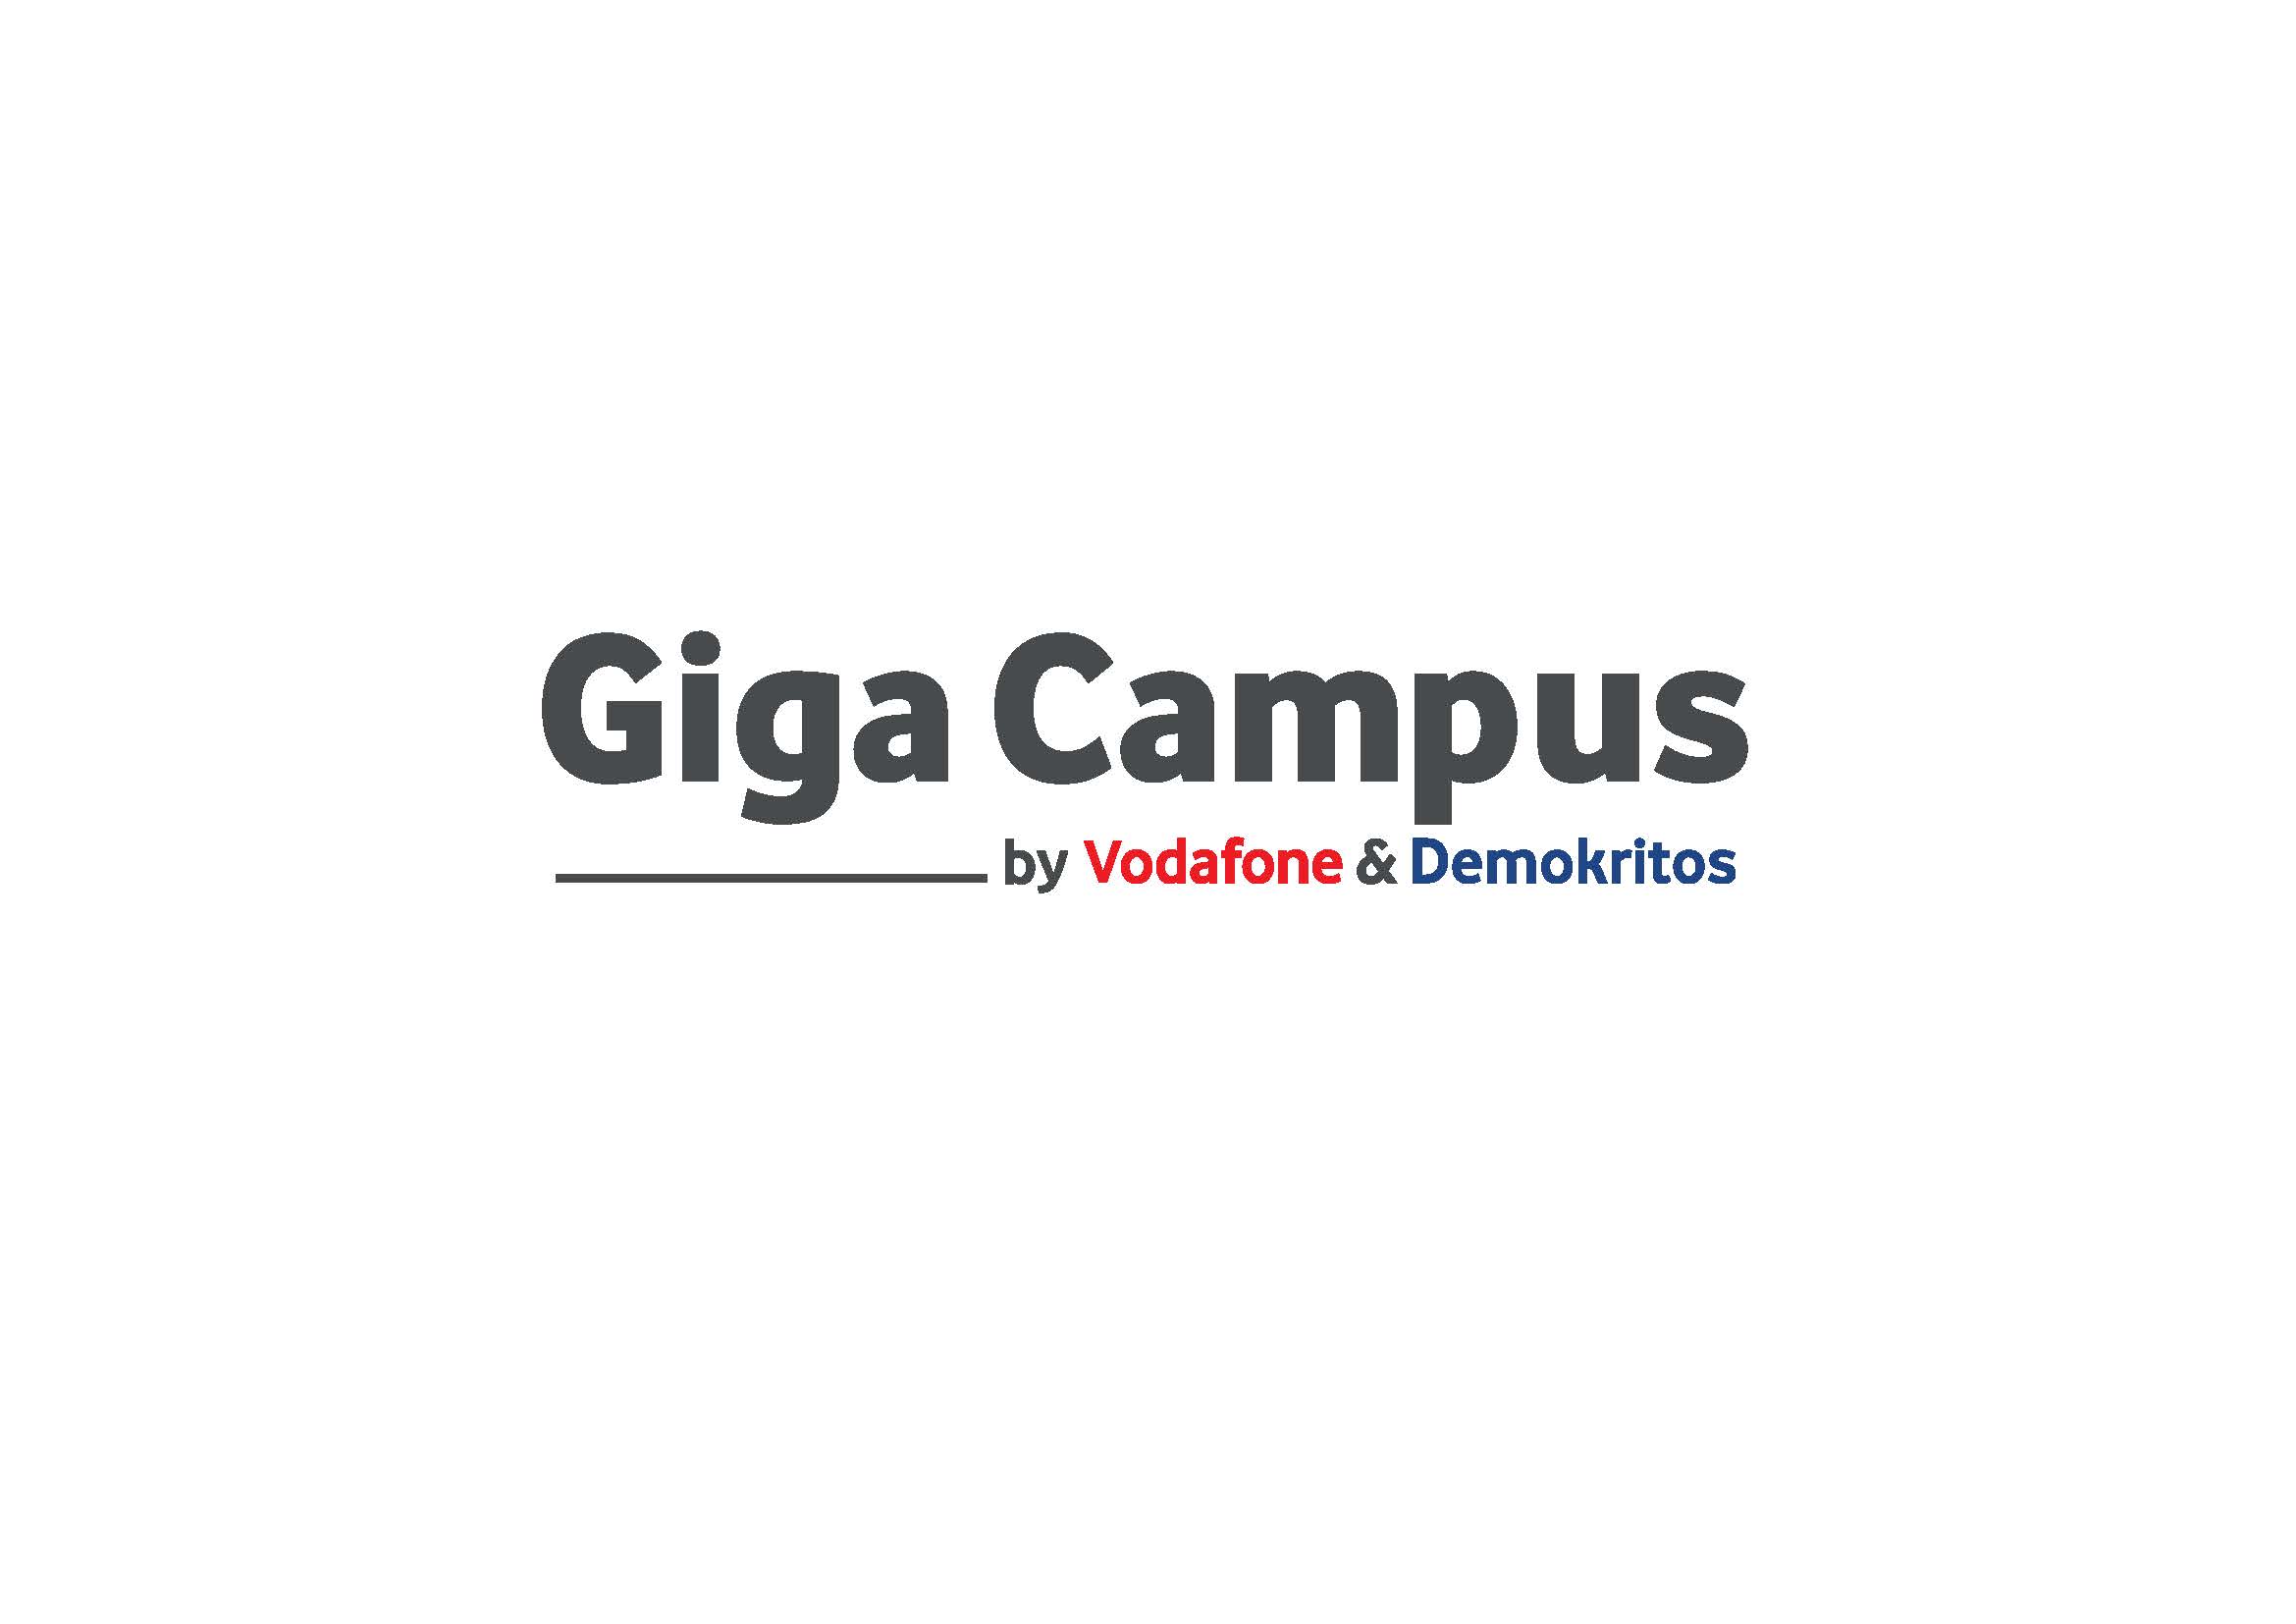 giga_campus_by_vodafone_demokritos.jpg